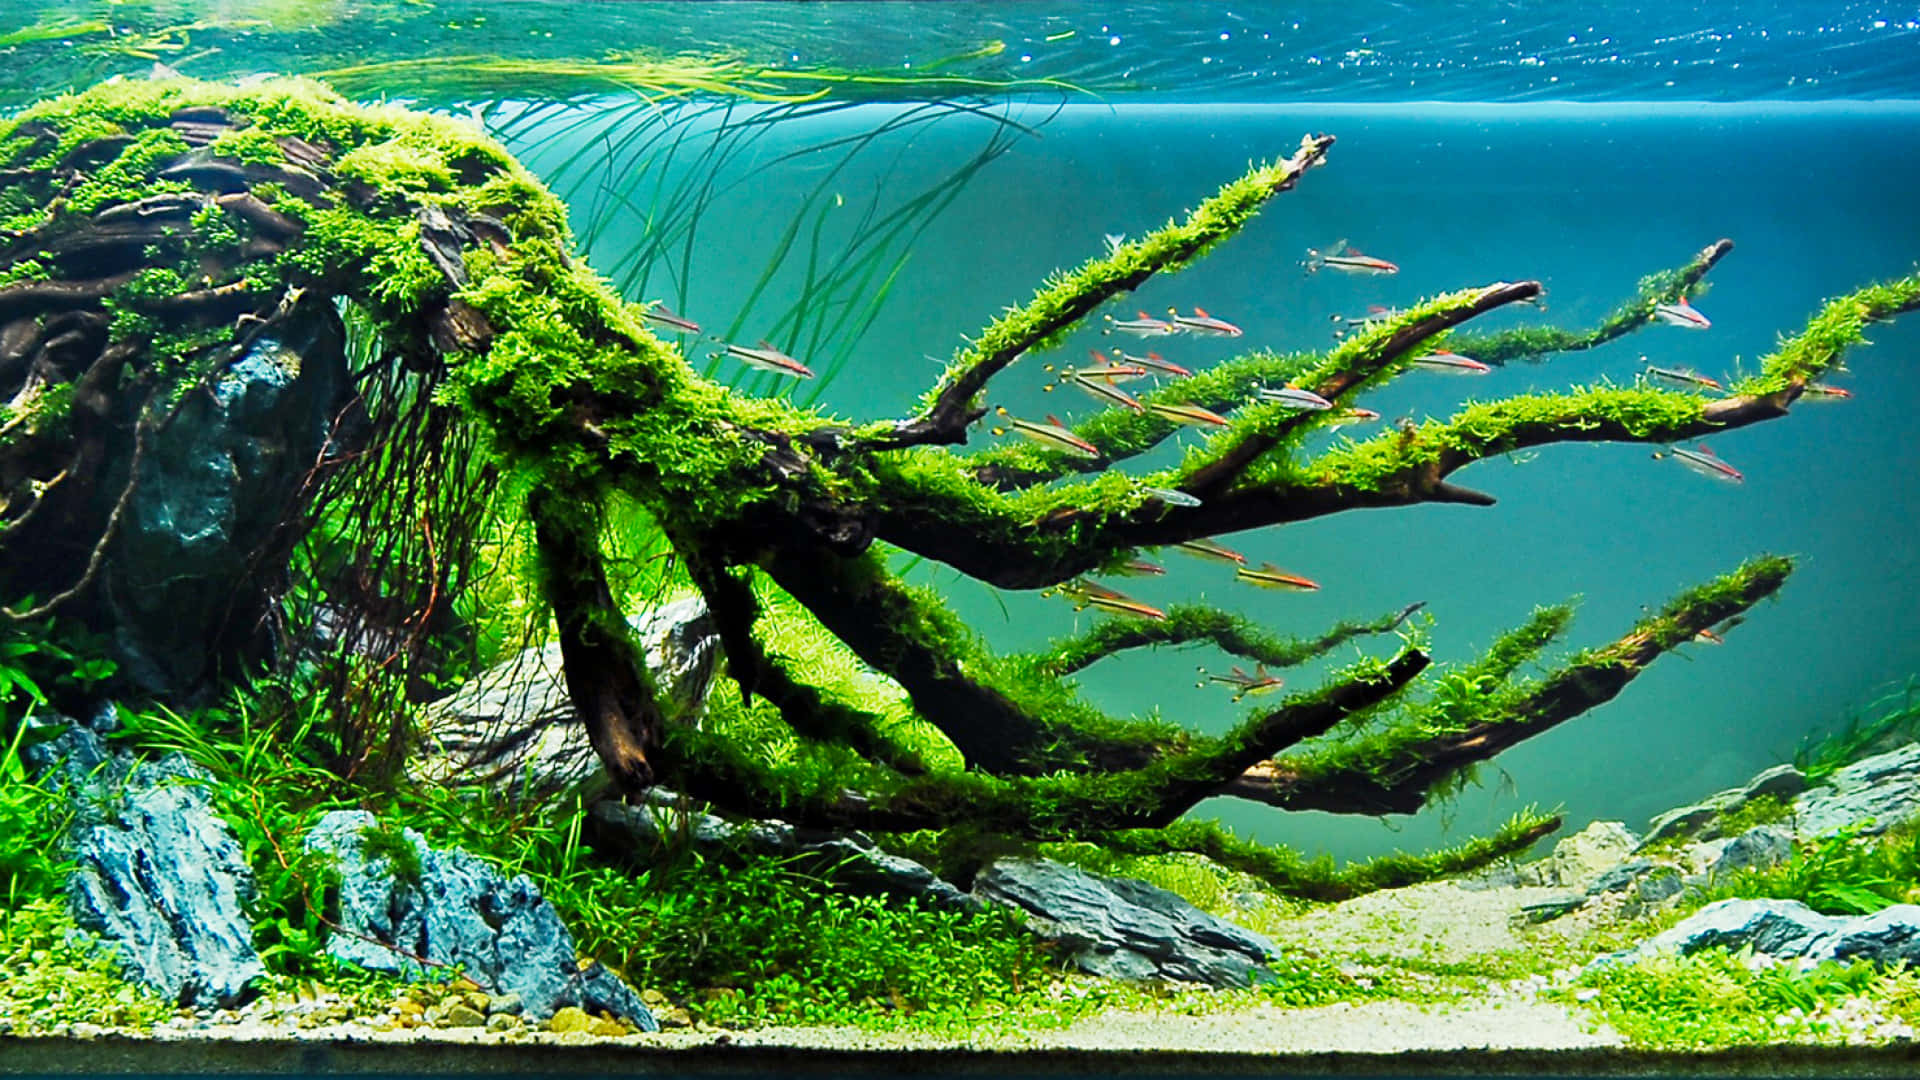 Enjoy a virtual view of a beautiful coral reef aquarium